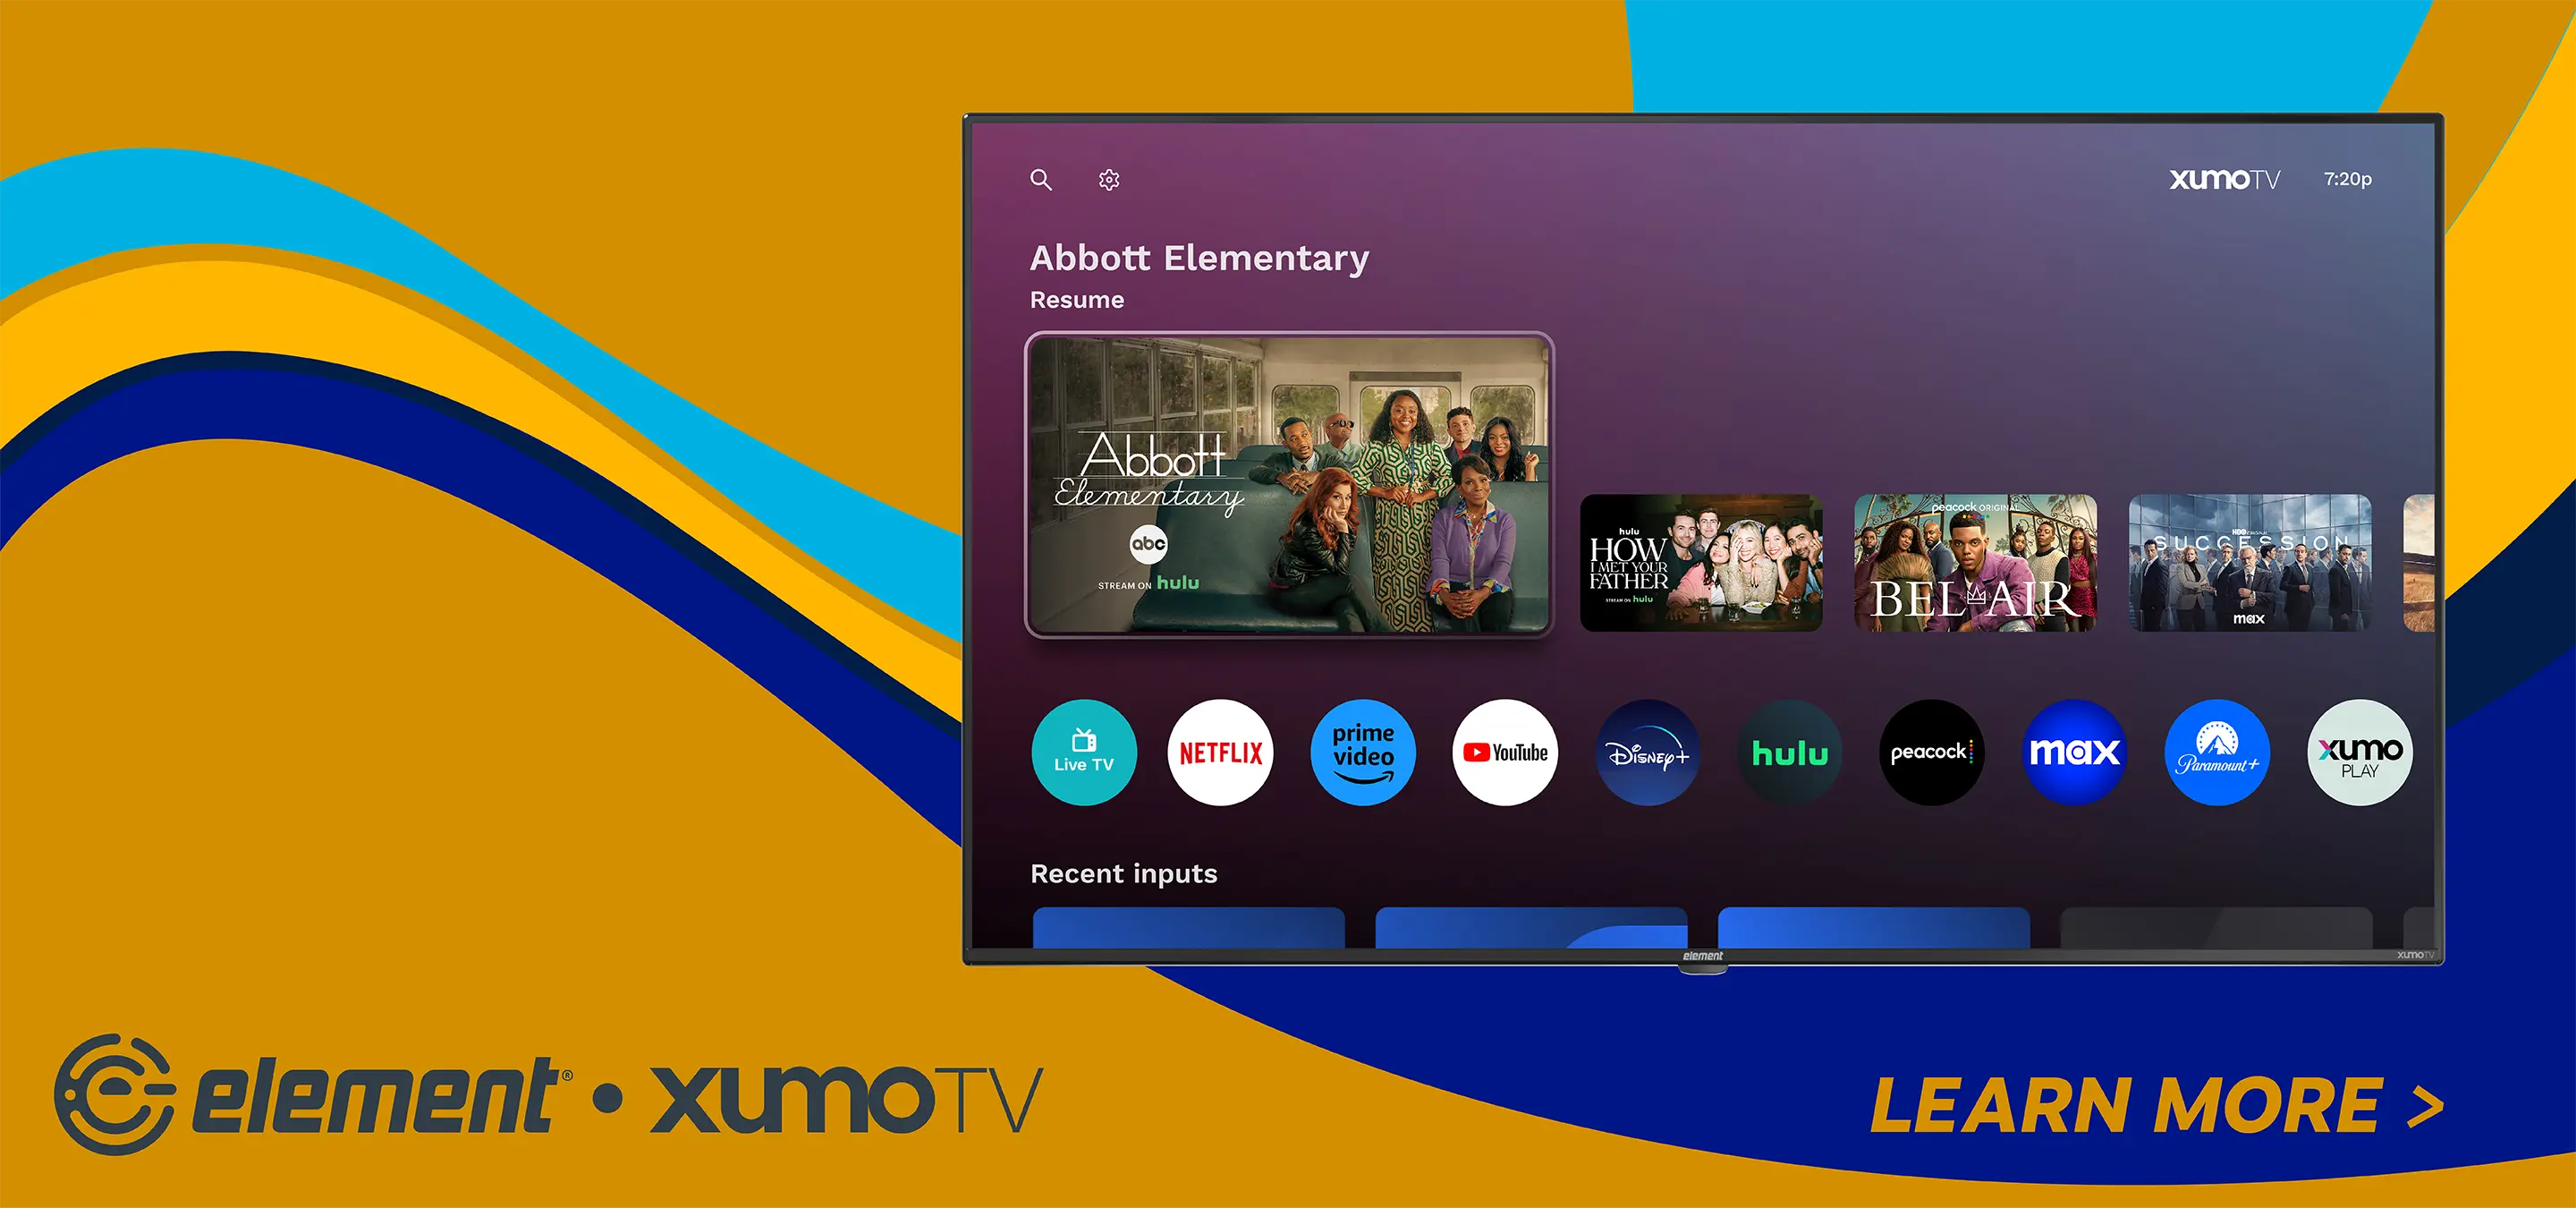 Xumo TV smart platform